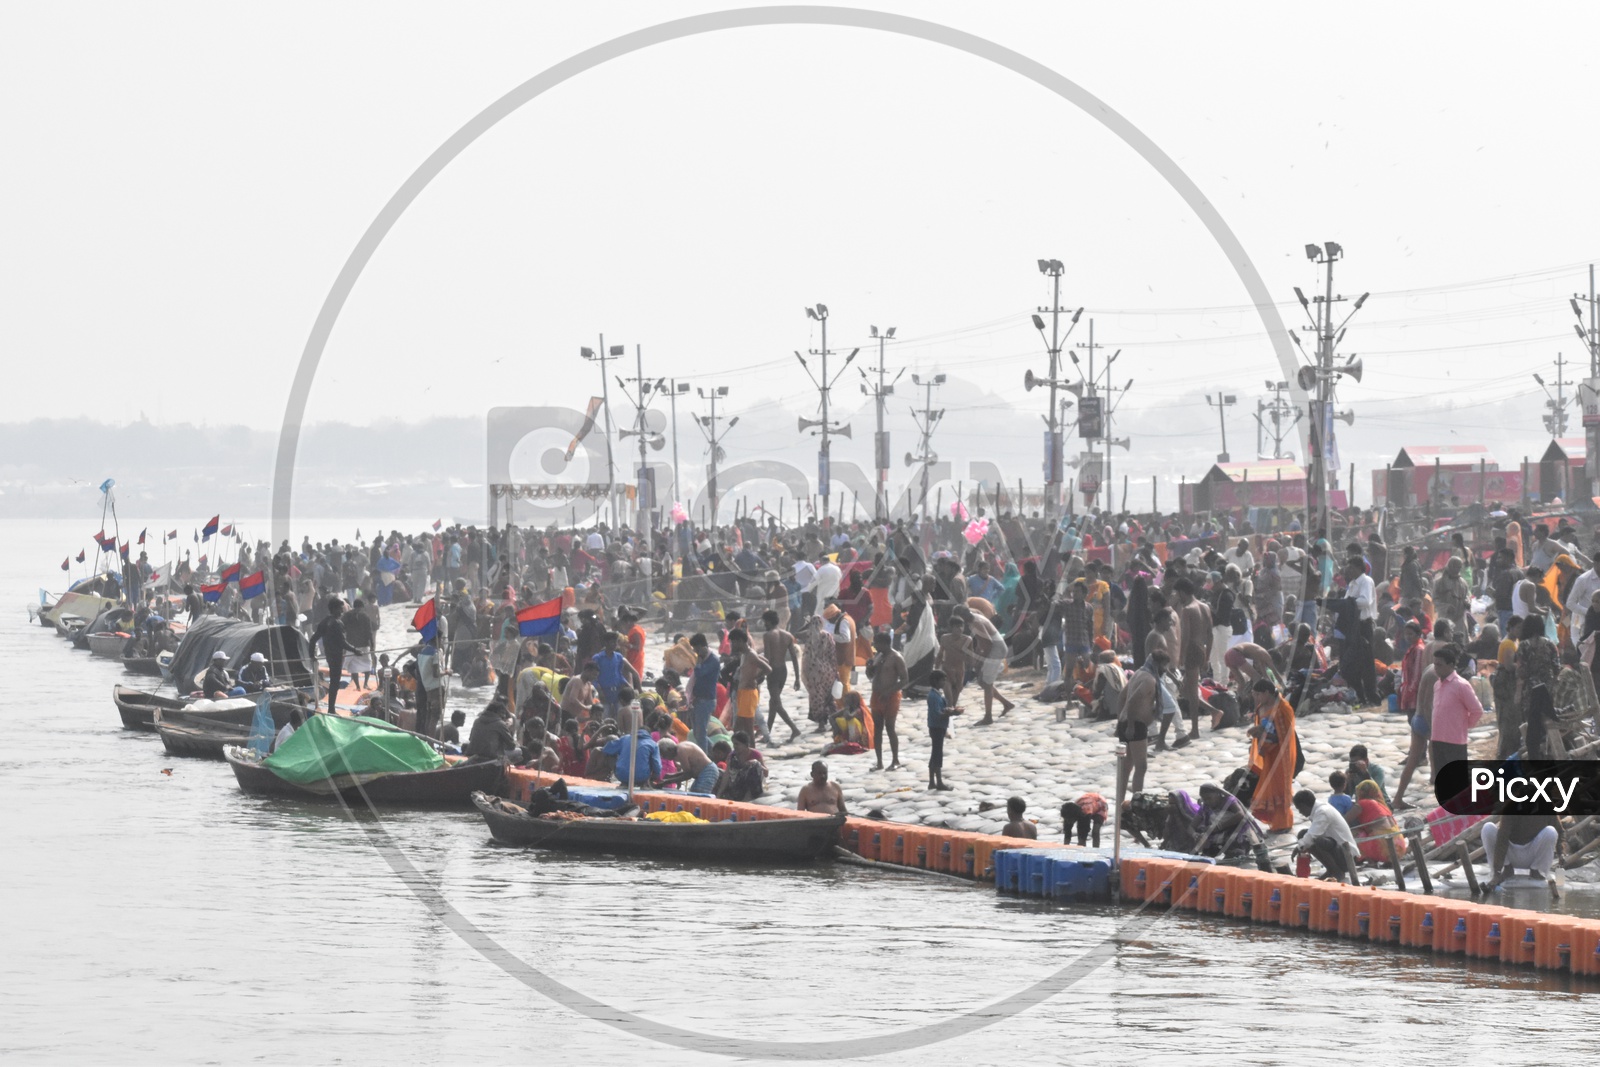 Sea of humans in The Ganga